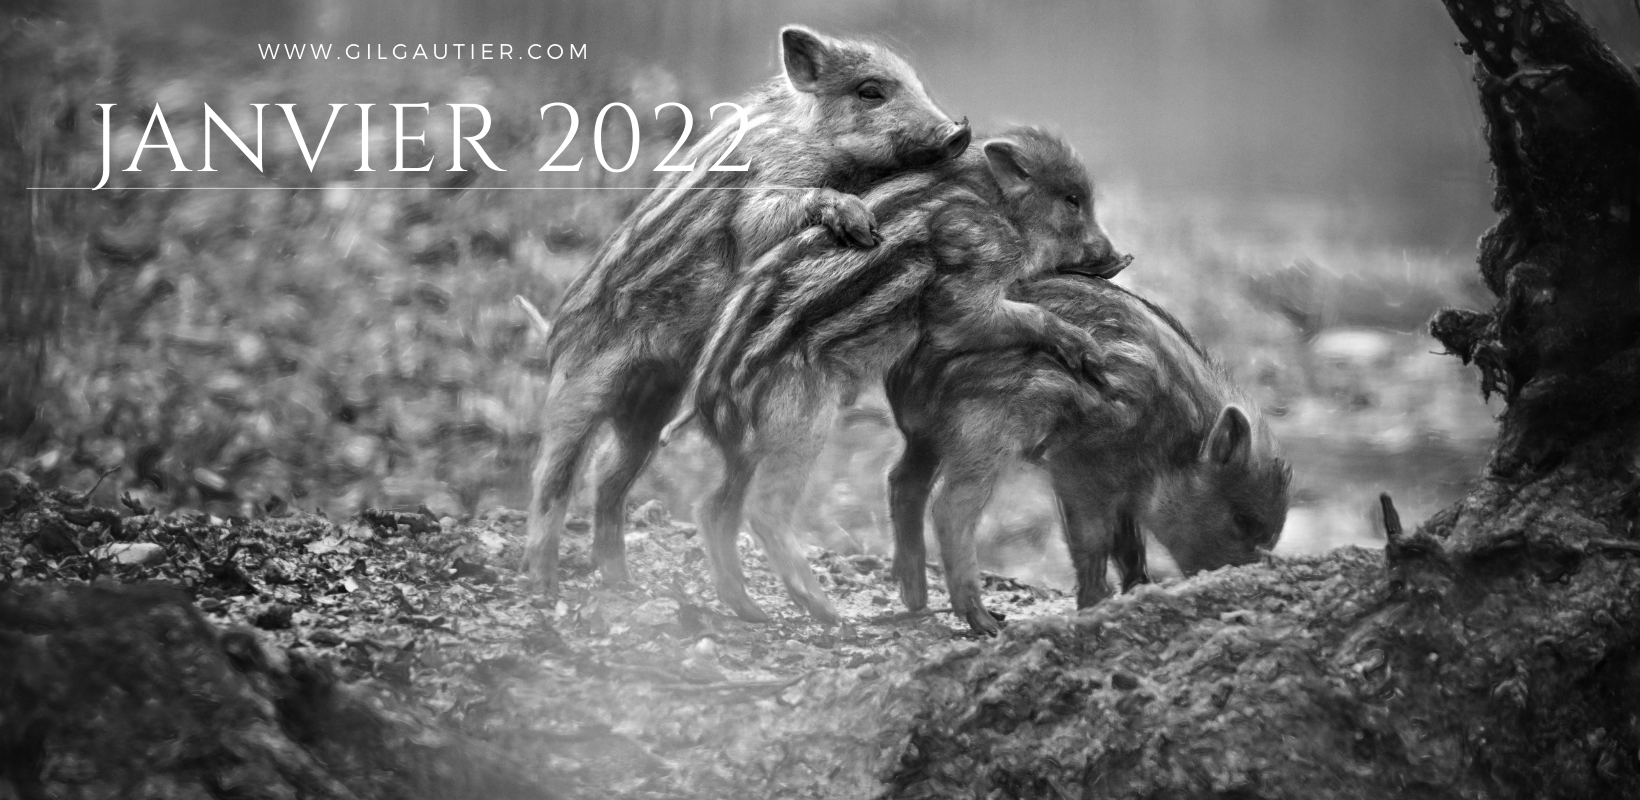 # JANVIER 2022